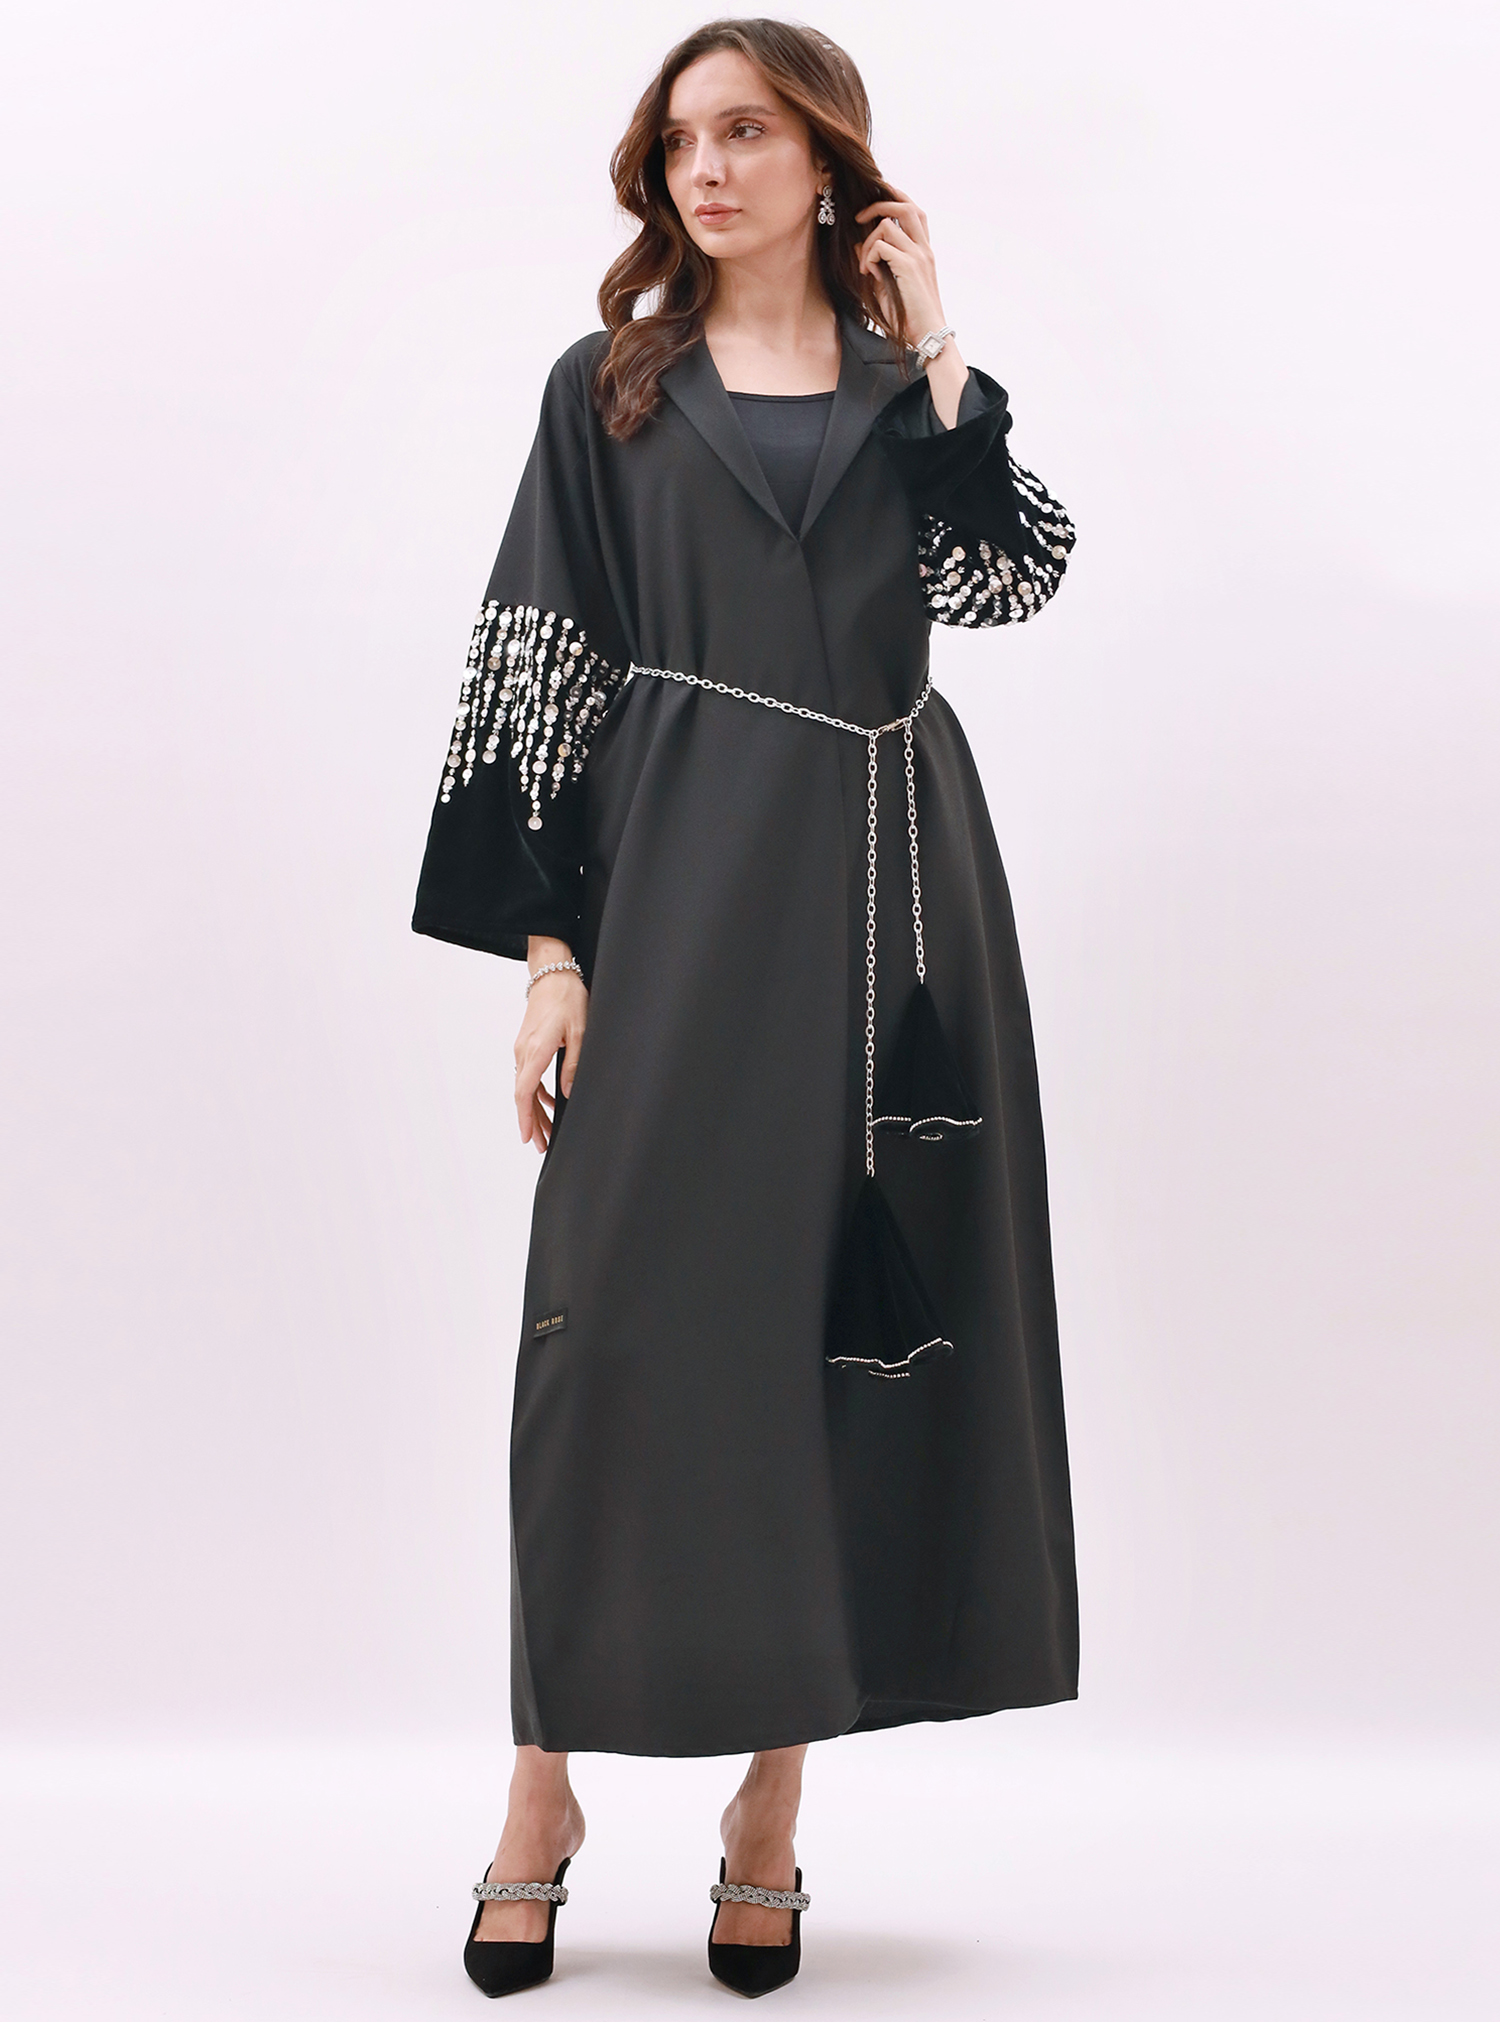 Model No- 1315 Coat style abaya made of armani satin and velvet, with ...